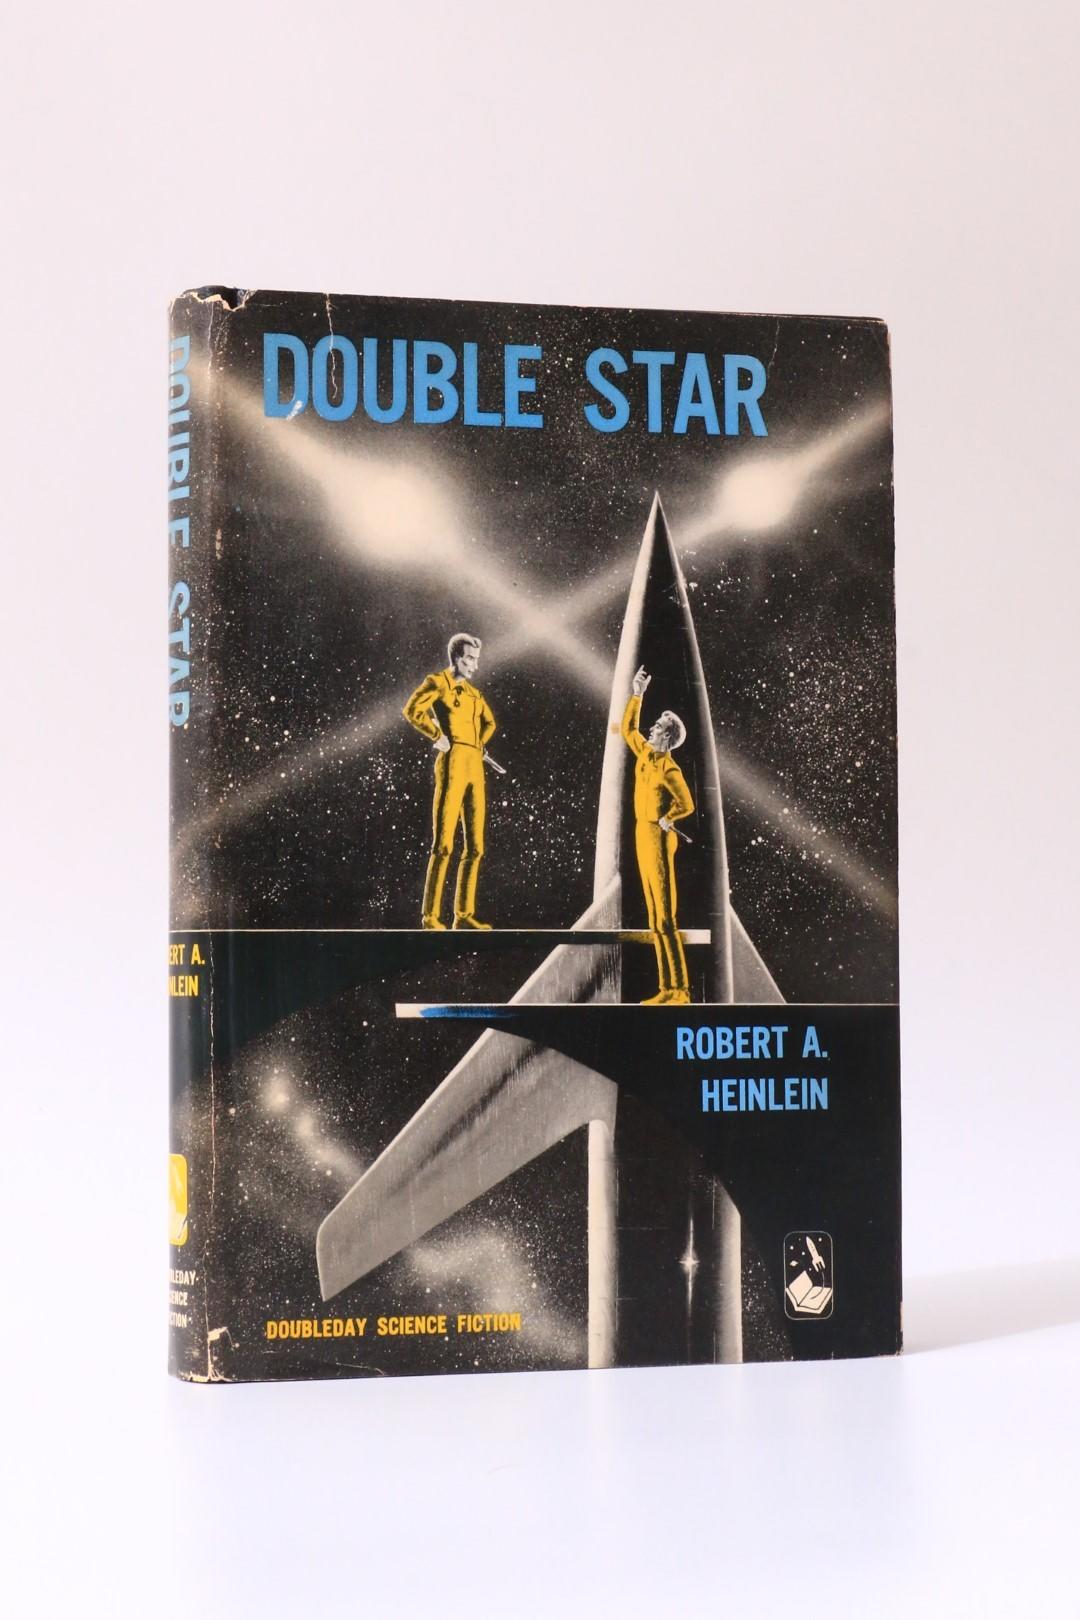 Robert A. Heinlein - Double Star - Doubleday, 1956, First Edition.